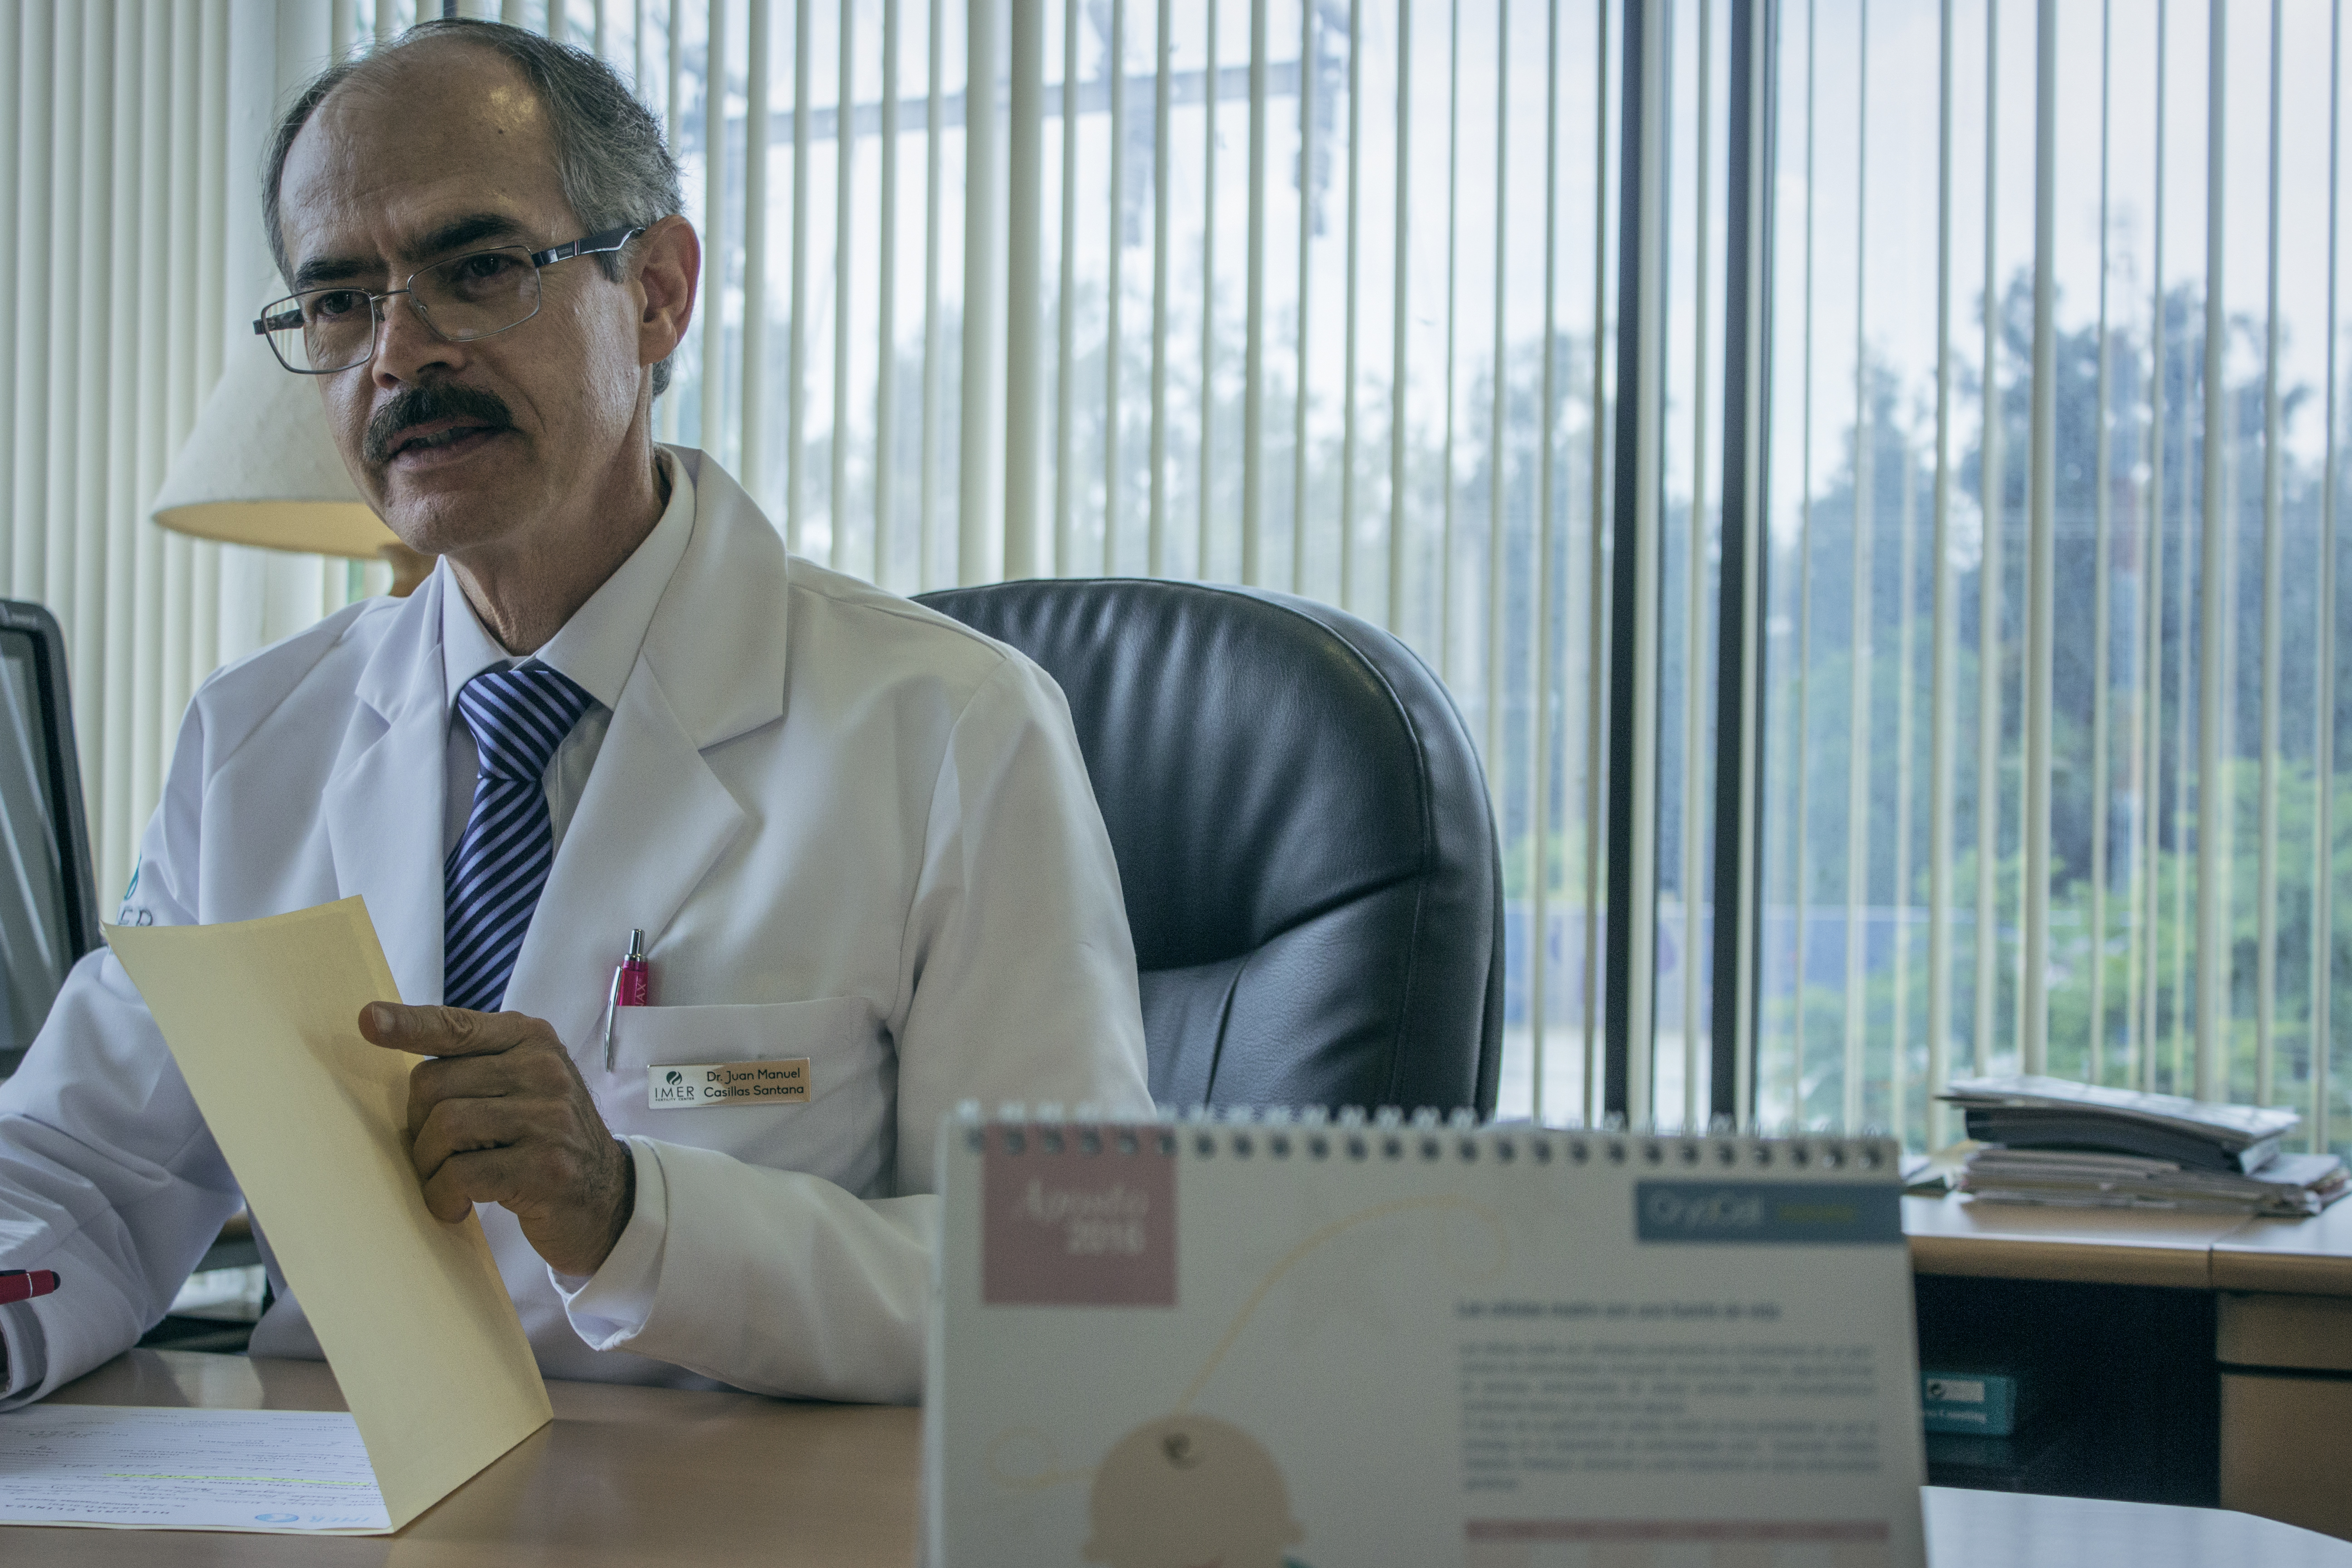  Dr. Juan Manuel Casillas Santana